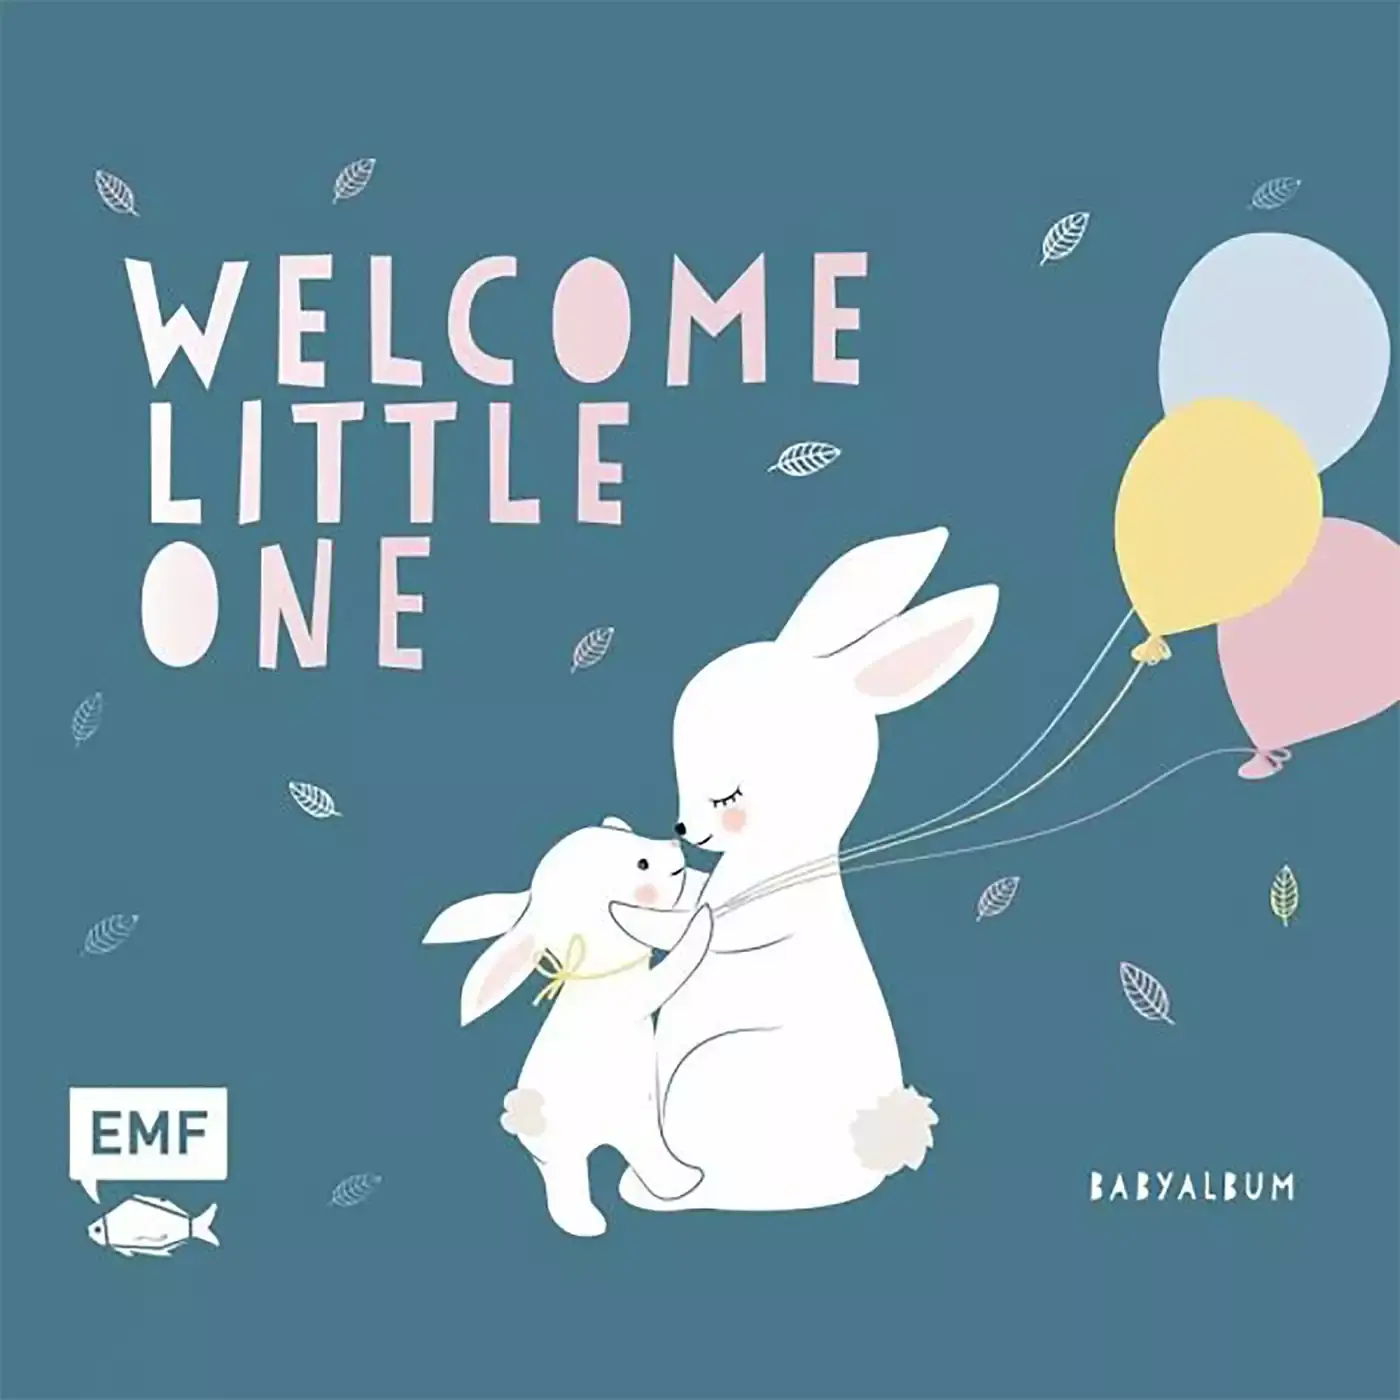 Babyalbum Welcome little one EMF 2000577521401 1